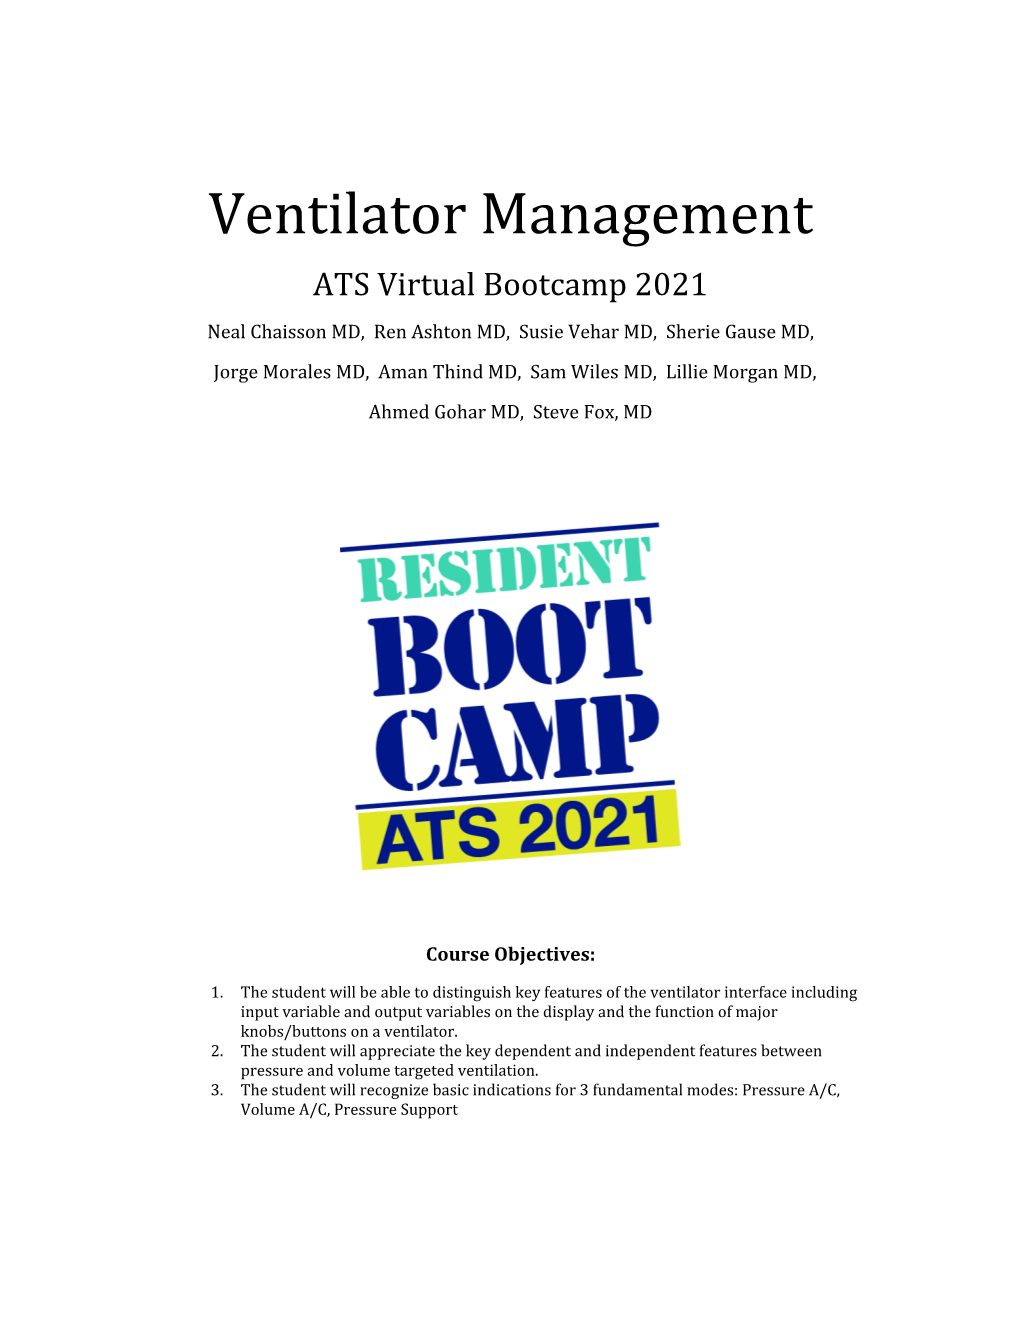 Ventilator Management ATS Virtual Bootcamp 2021